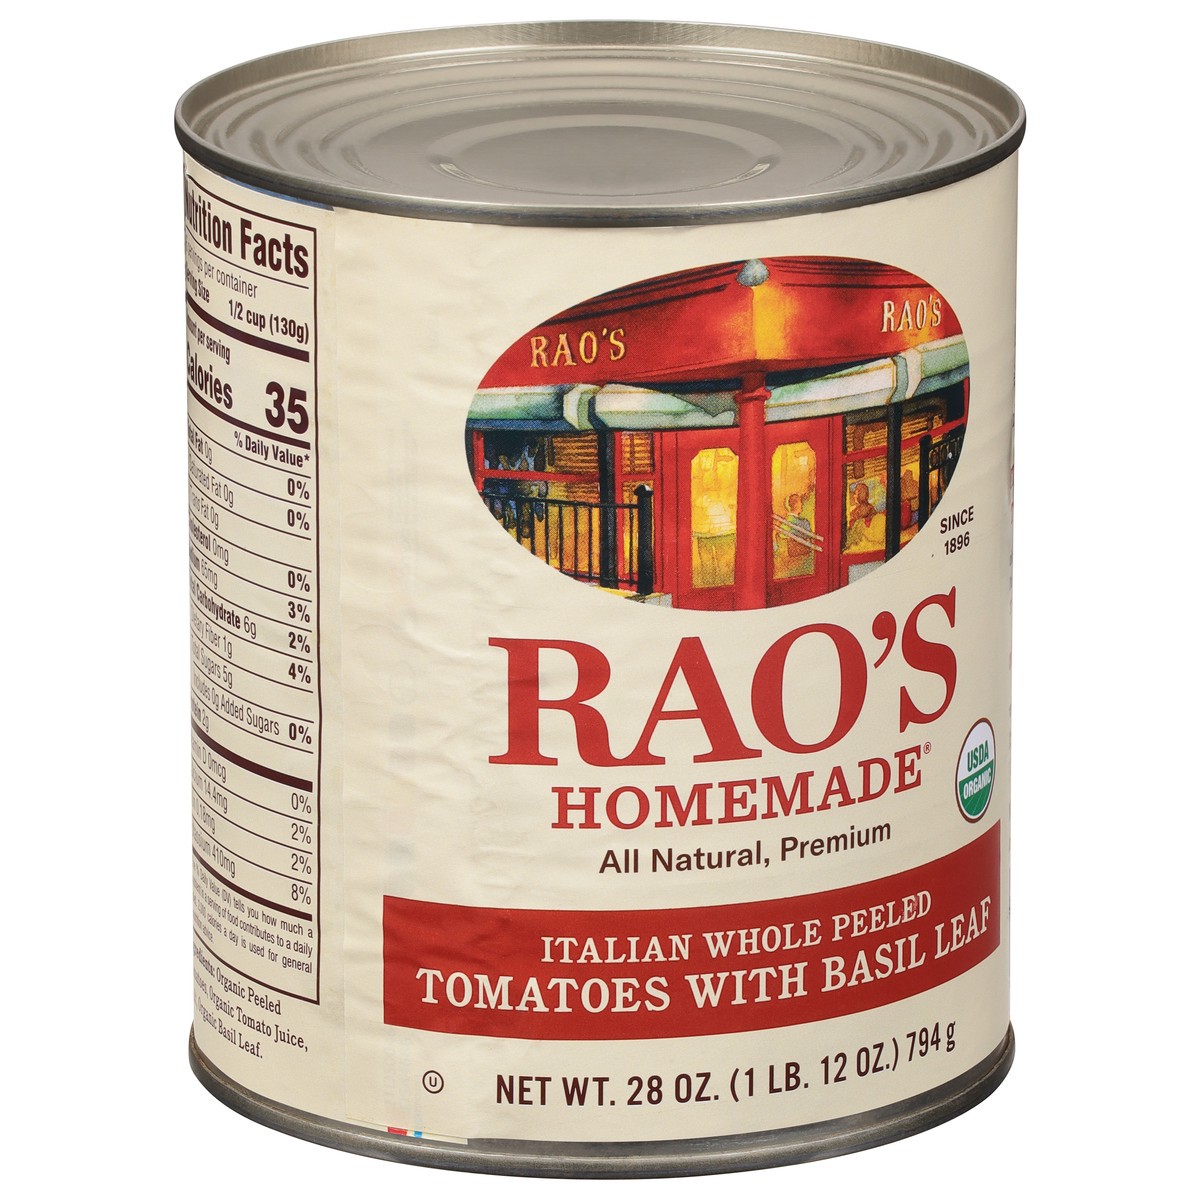 slide 10 of 12, Rao's Homemade Homemade Italian Whole Peeled Tomatoes with Basil Leaf 28 oz, 28 oz